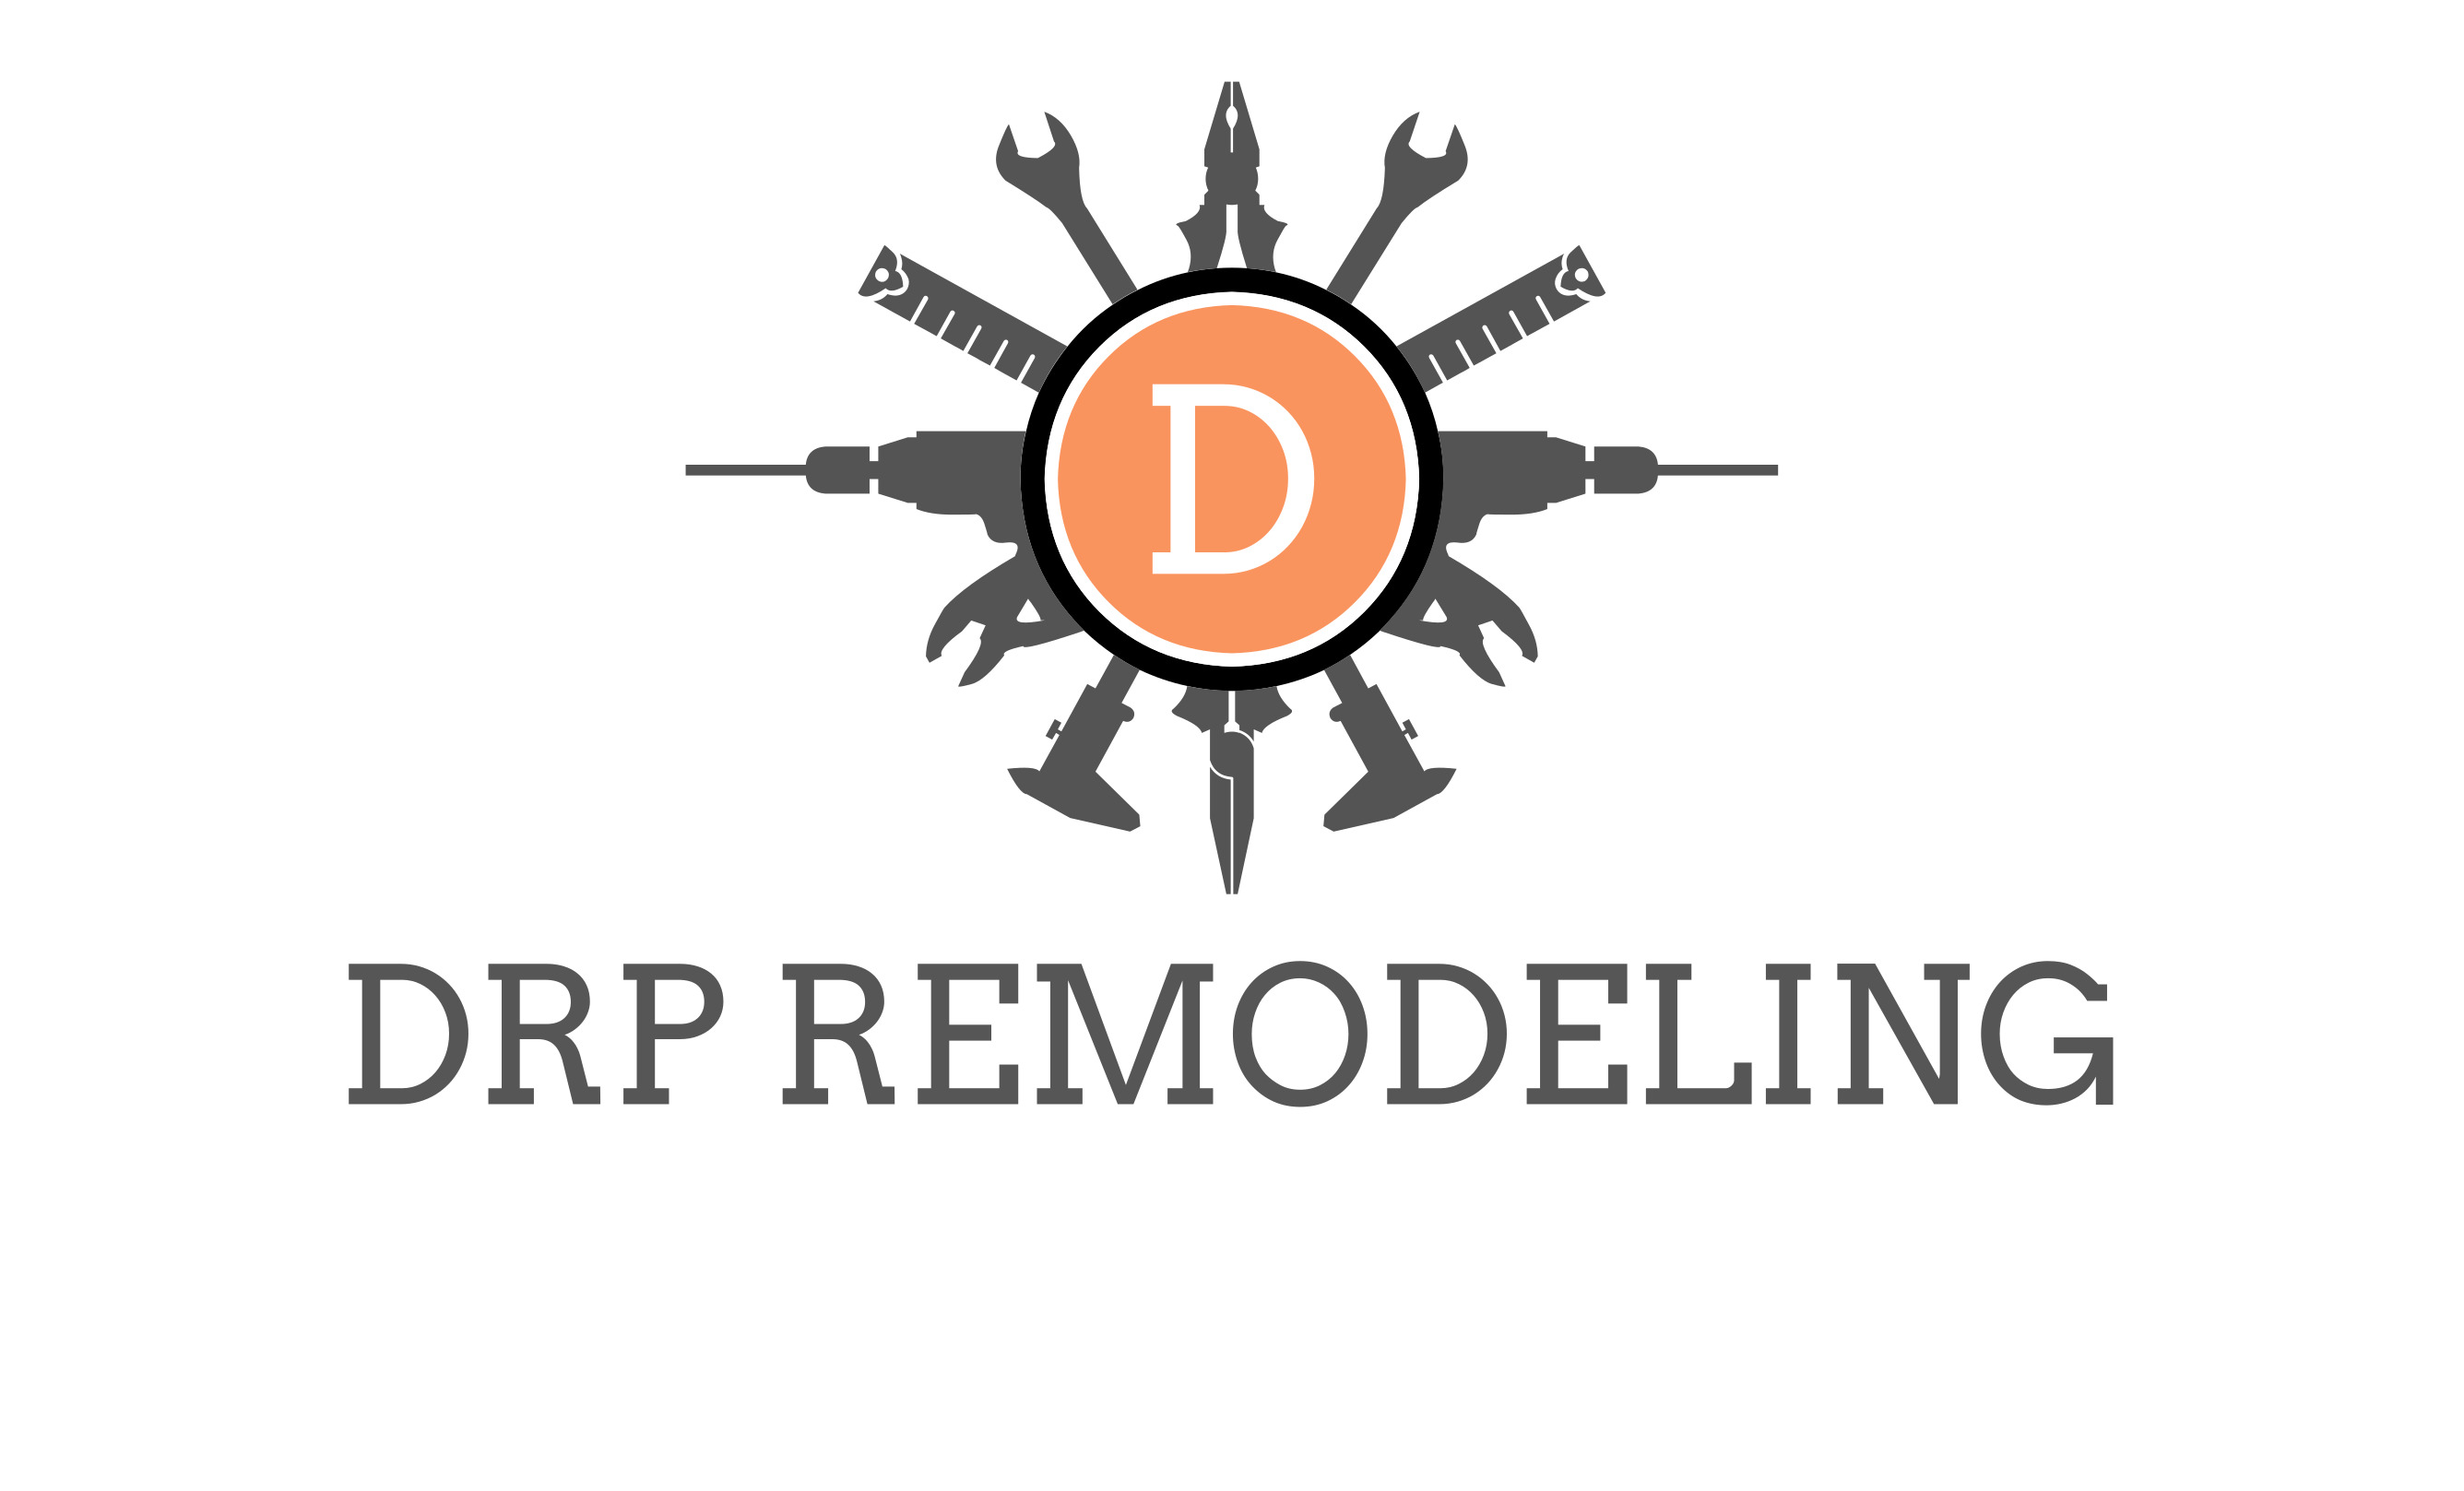 DRP Remodeling Logo